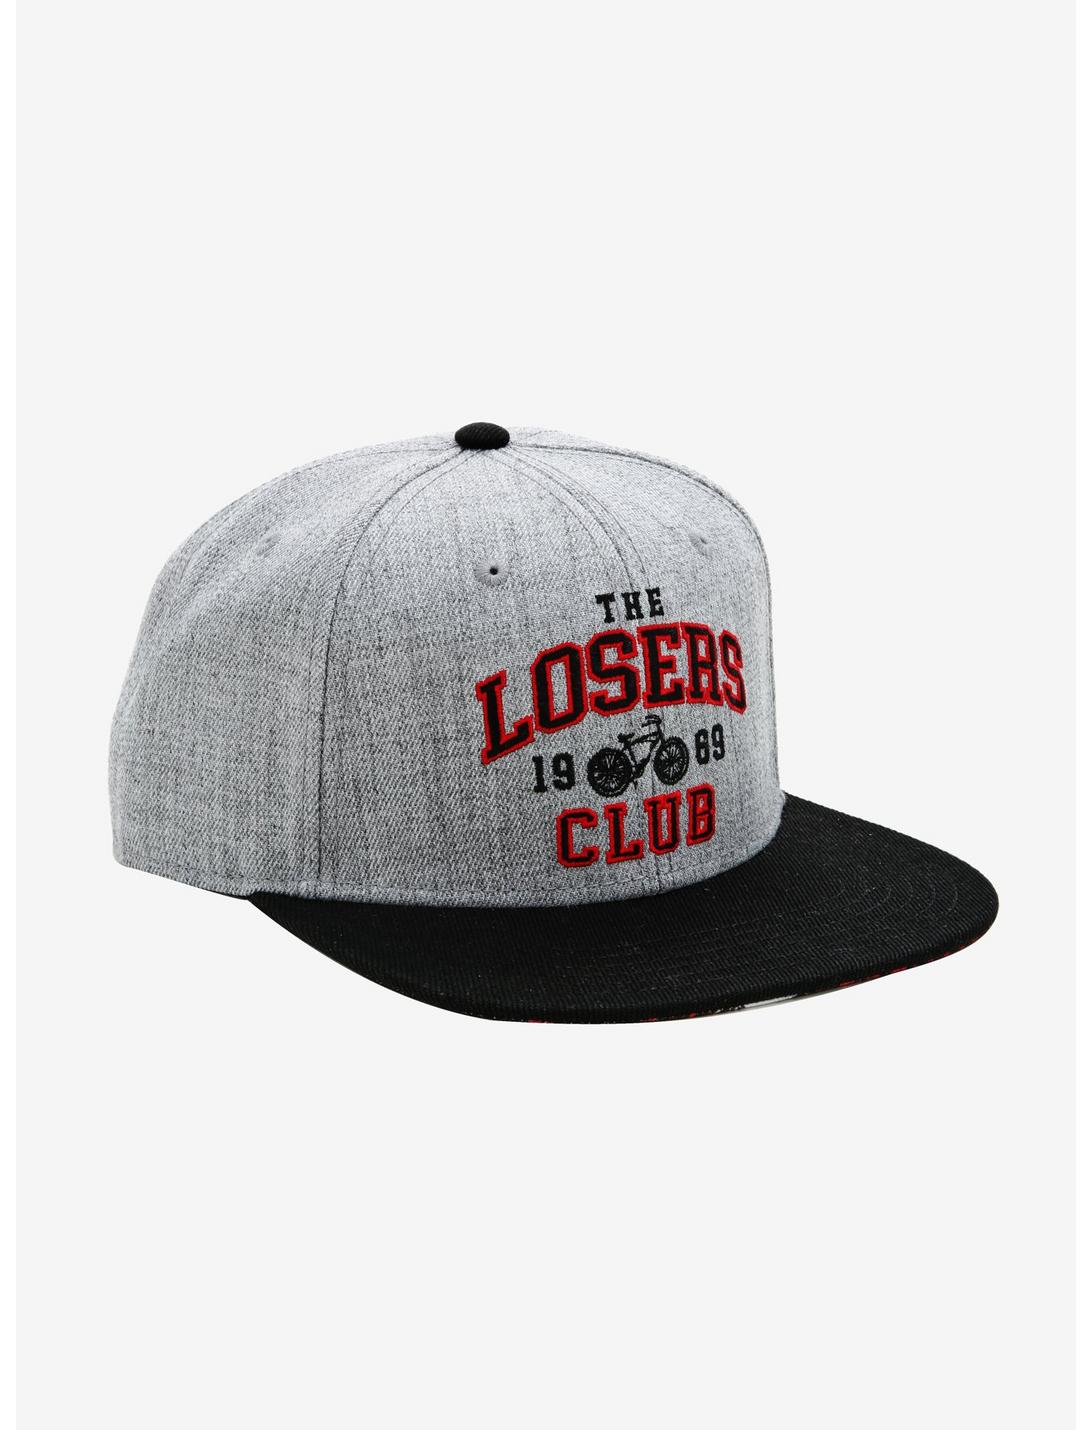 IT Losers Club Snapback Hat, , hi-res